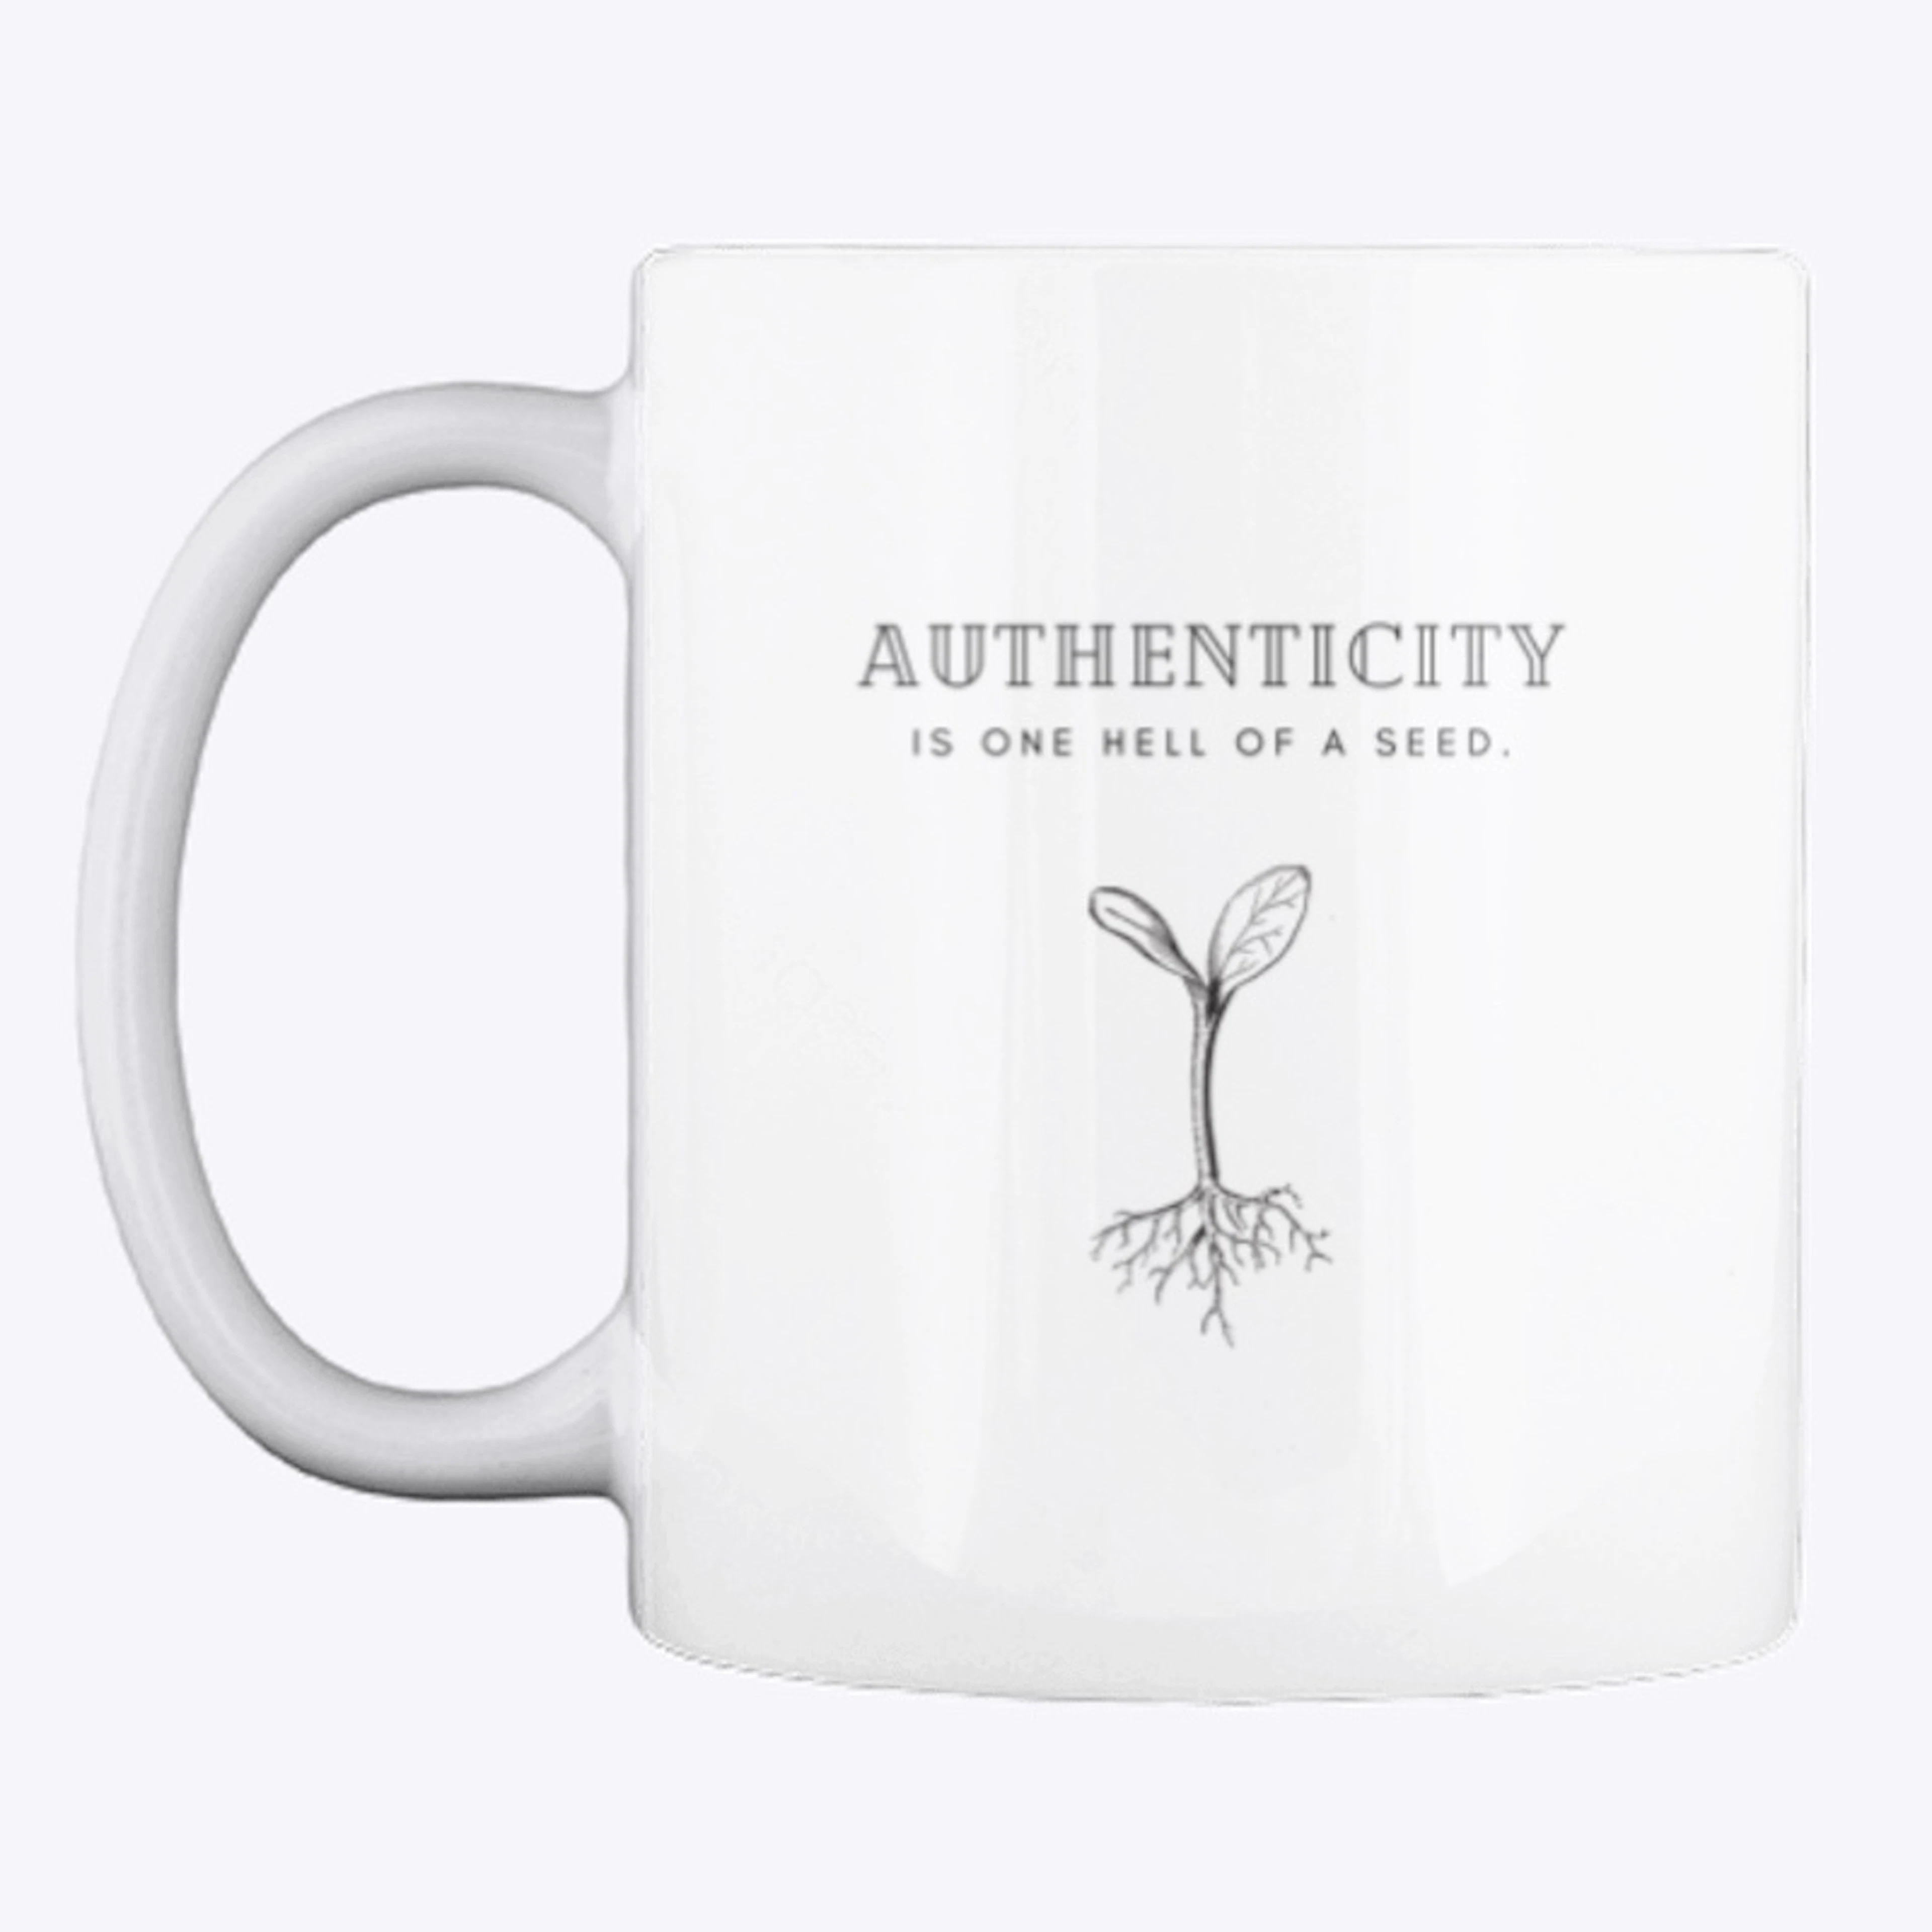 Authenticity Mug